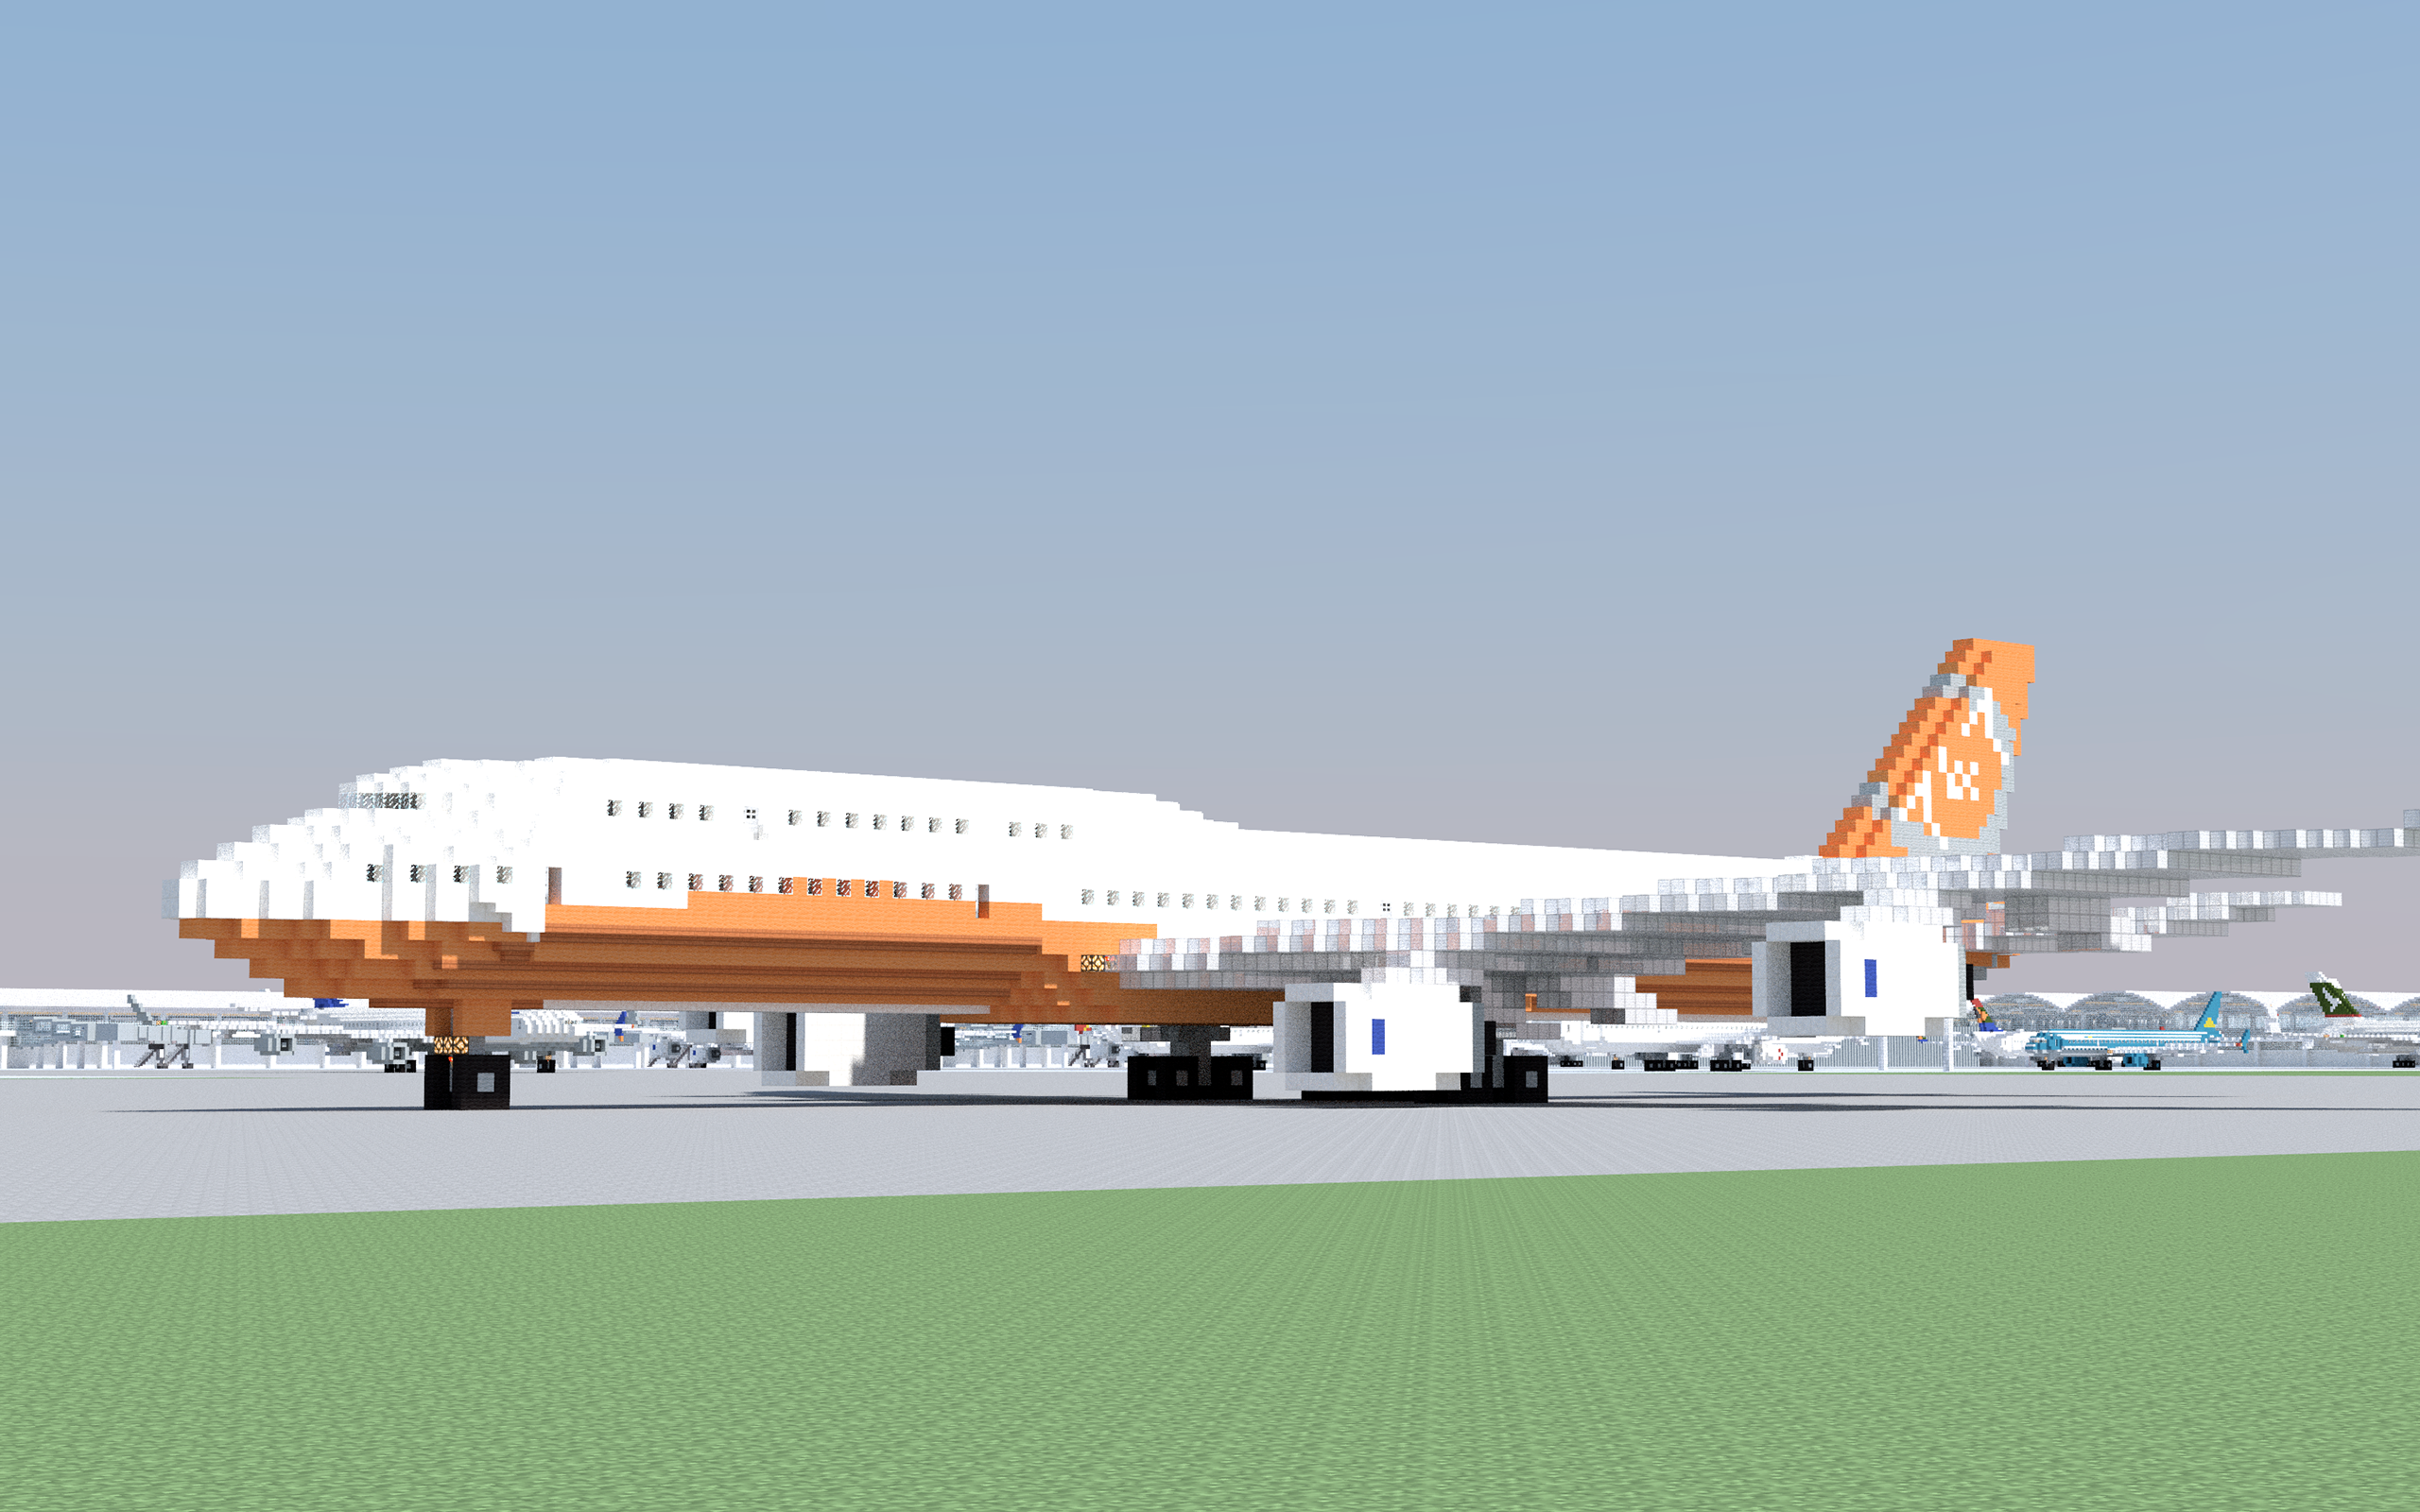 General 2560x1600 aircraft airplane Boeing 747 3D Blocks airport Minecraft digital art vehicle PC gaming video games